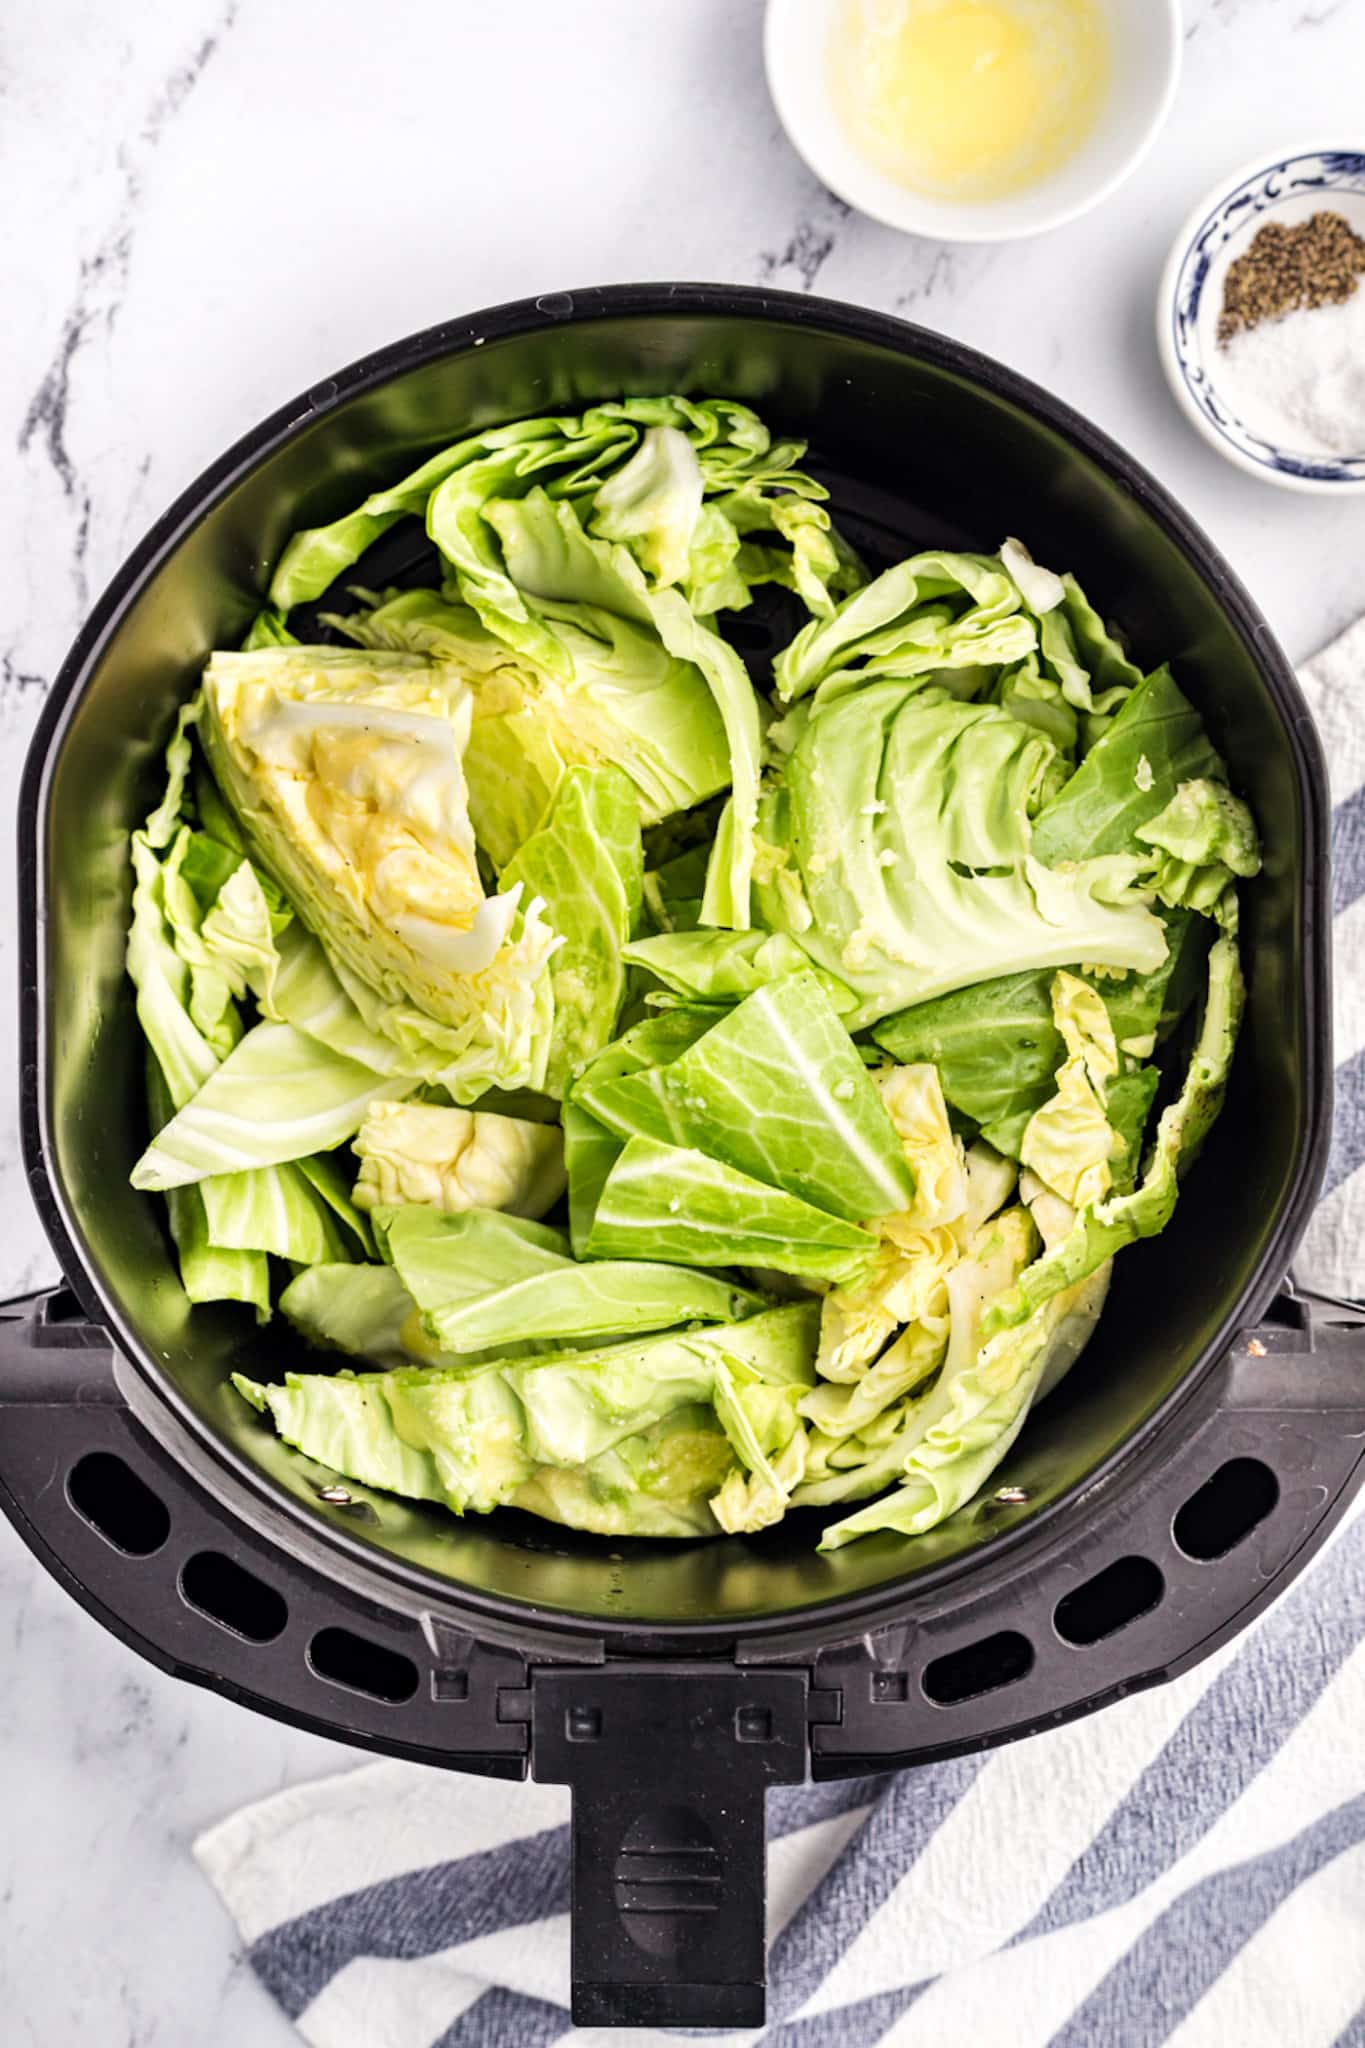 Cut cabbage in an air fryer basket.